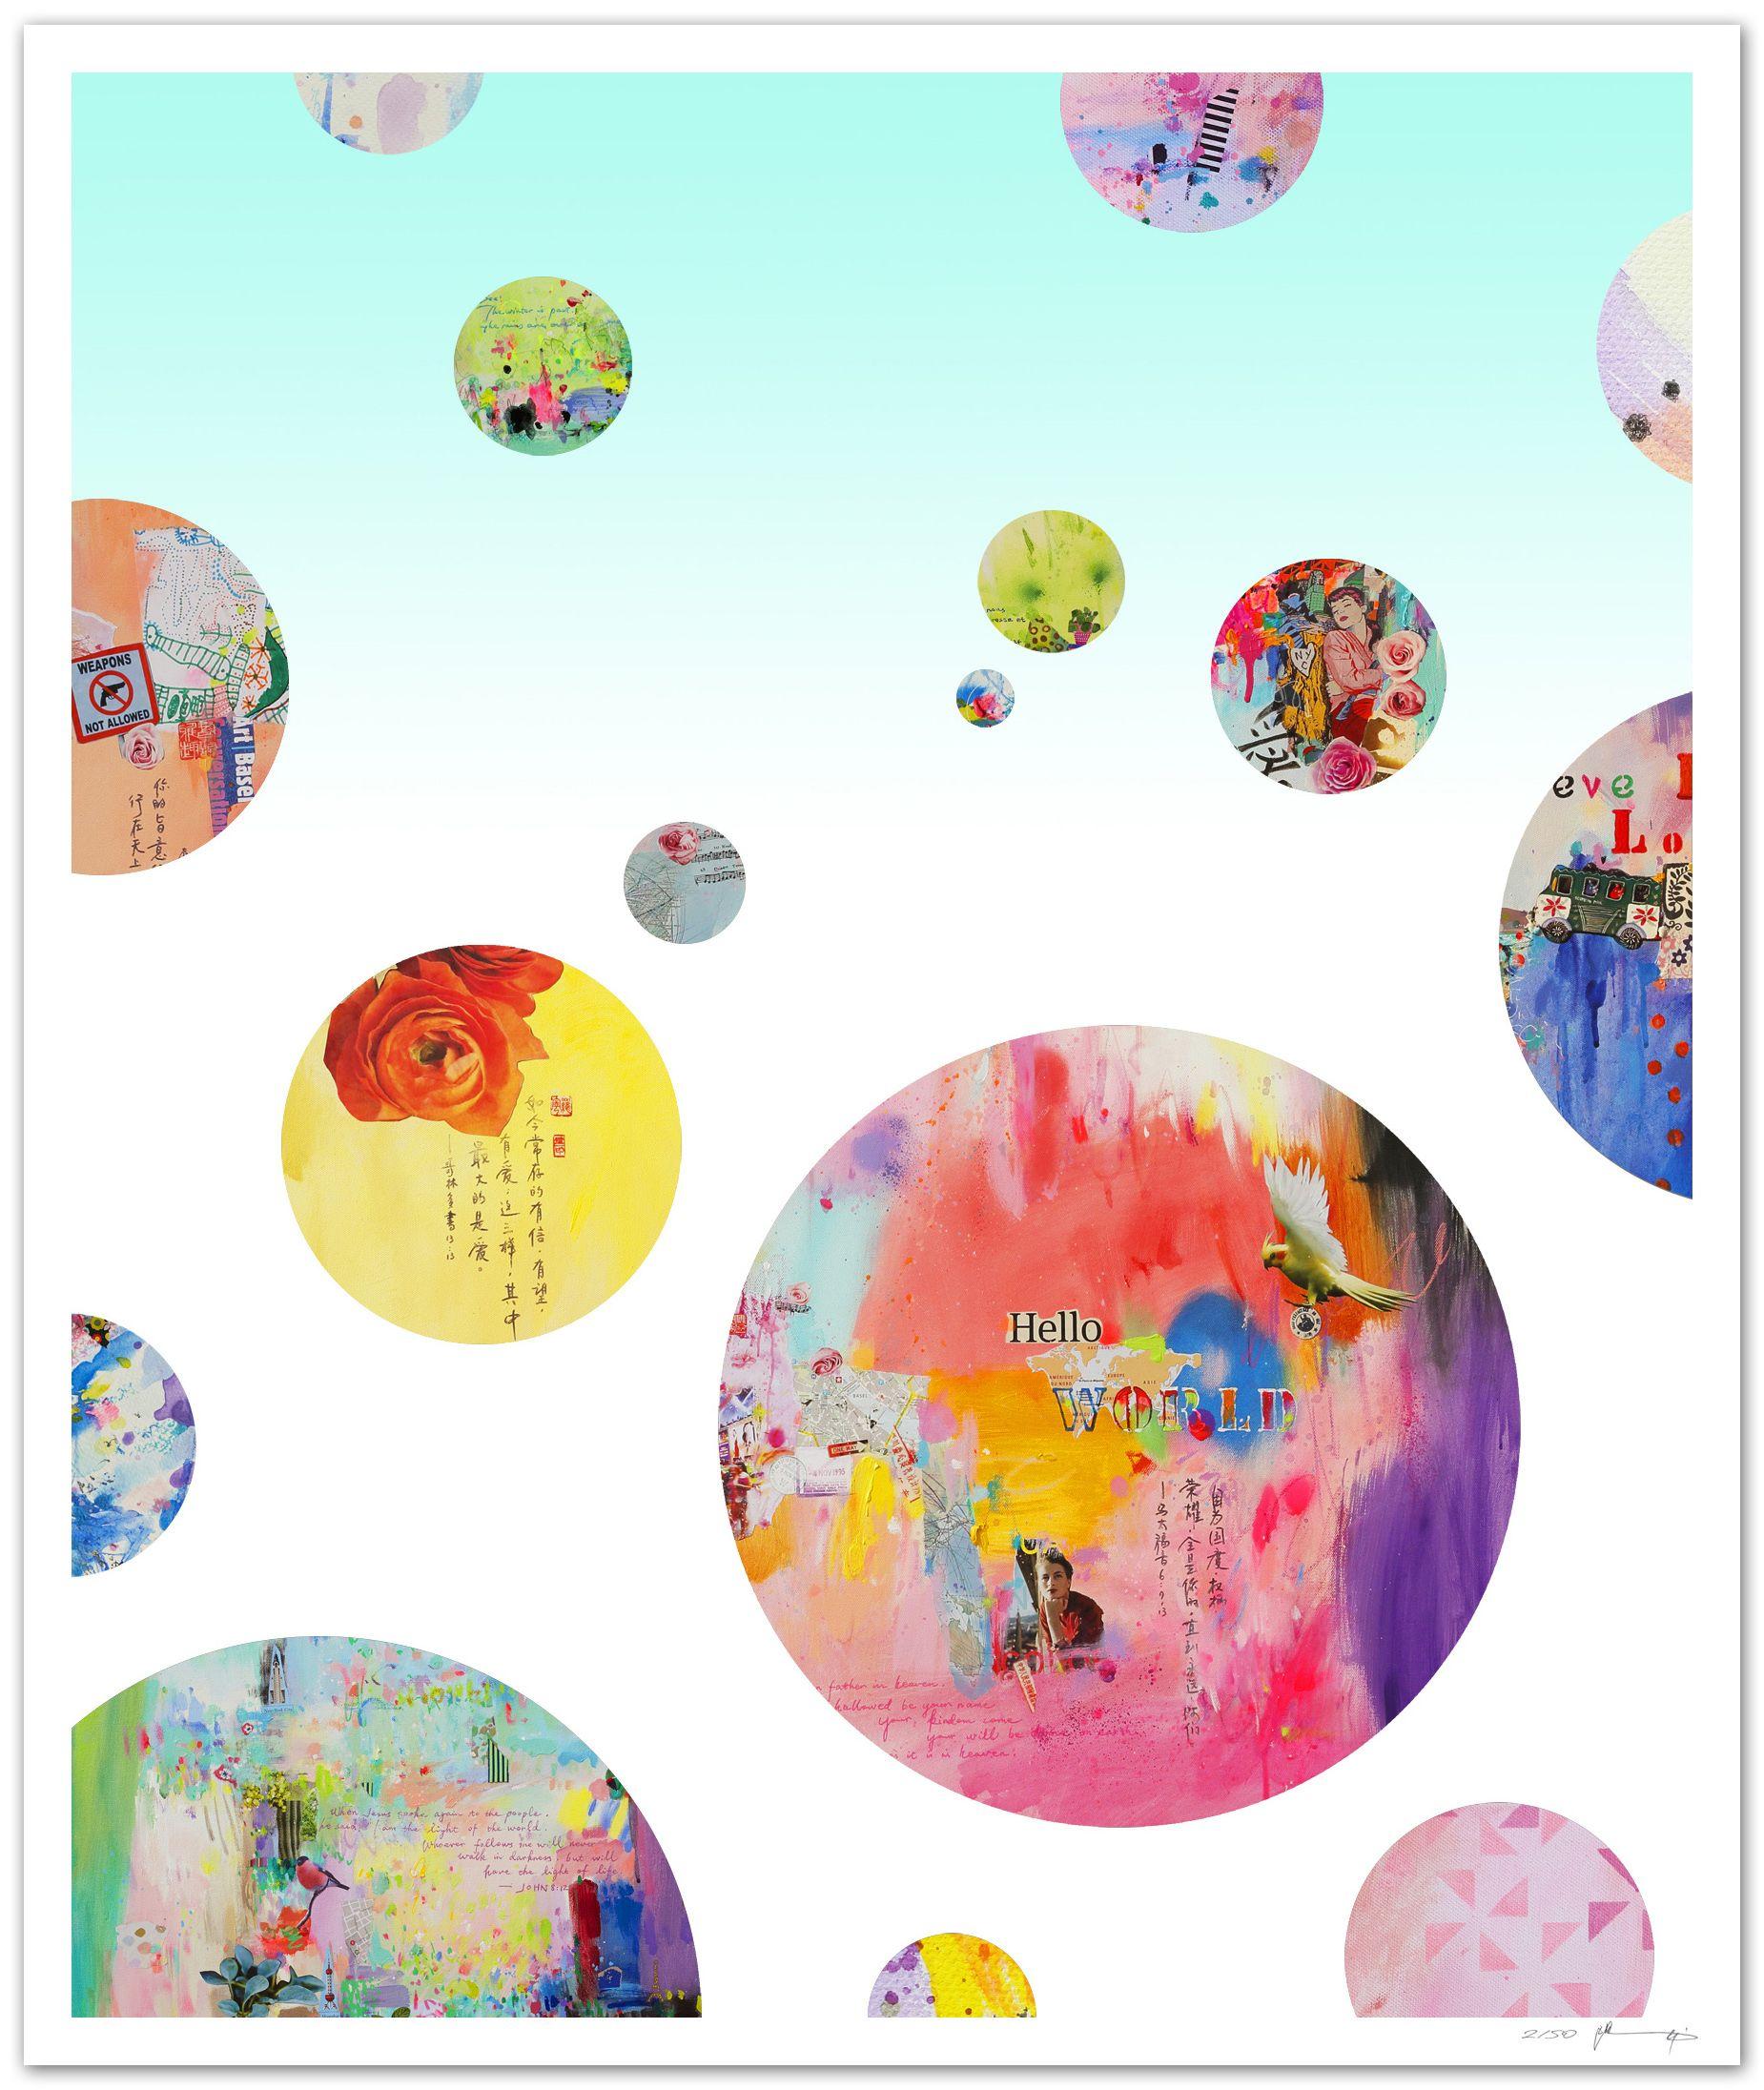 Xiaoyang Galas Abstract Print - Hello world II - Fine art giclÃCe print, Digital on Paper